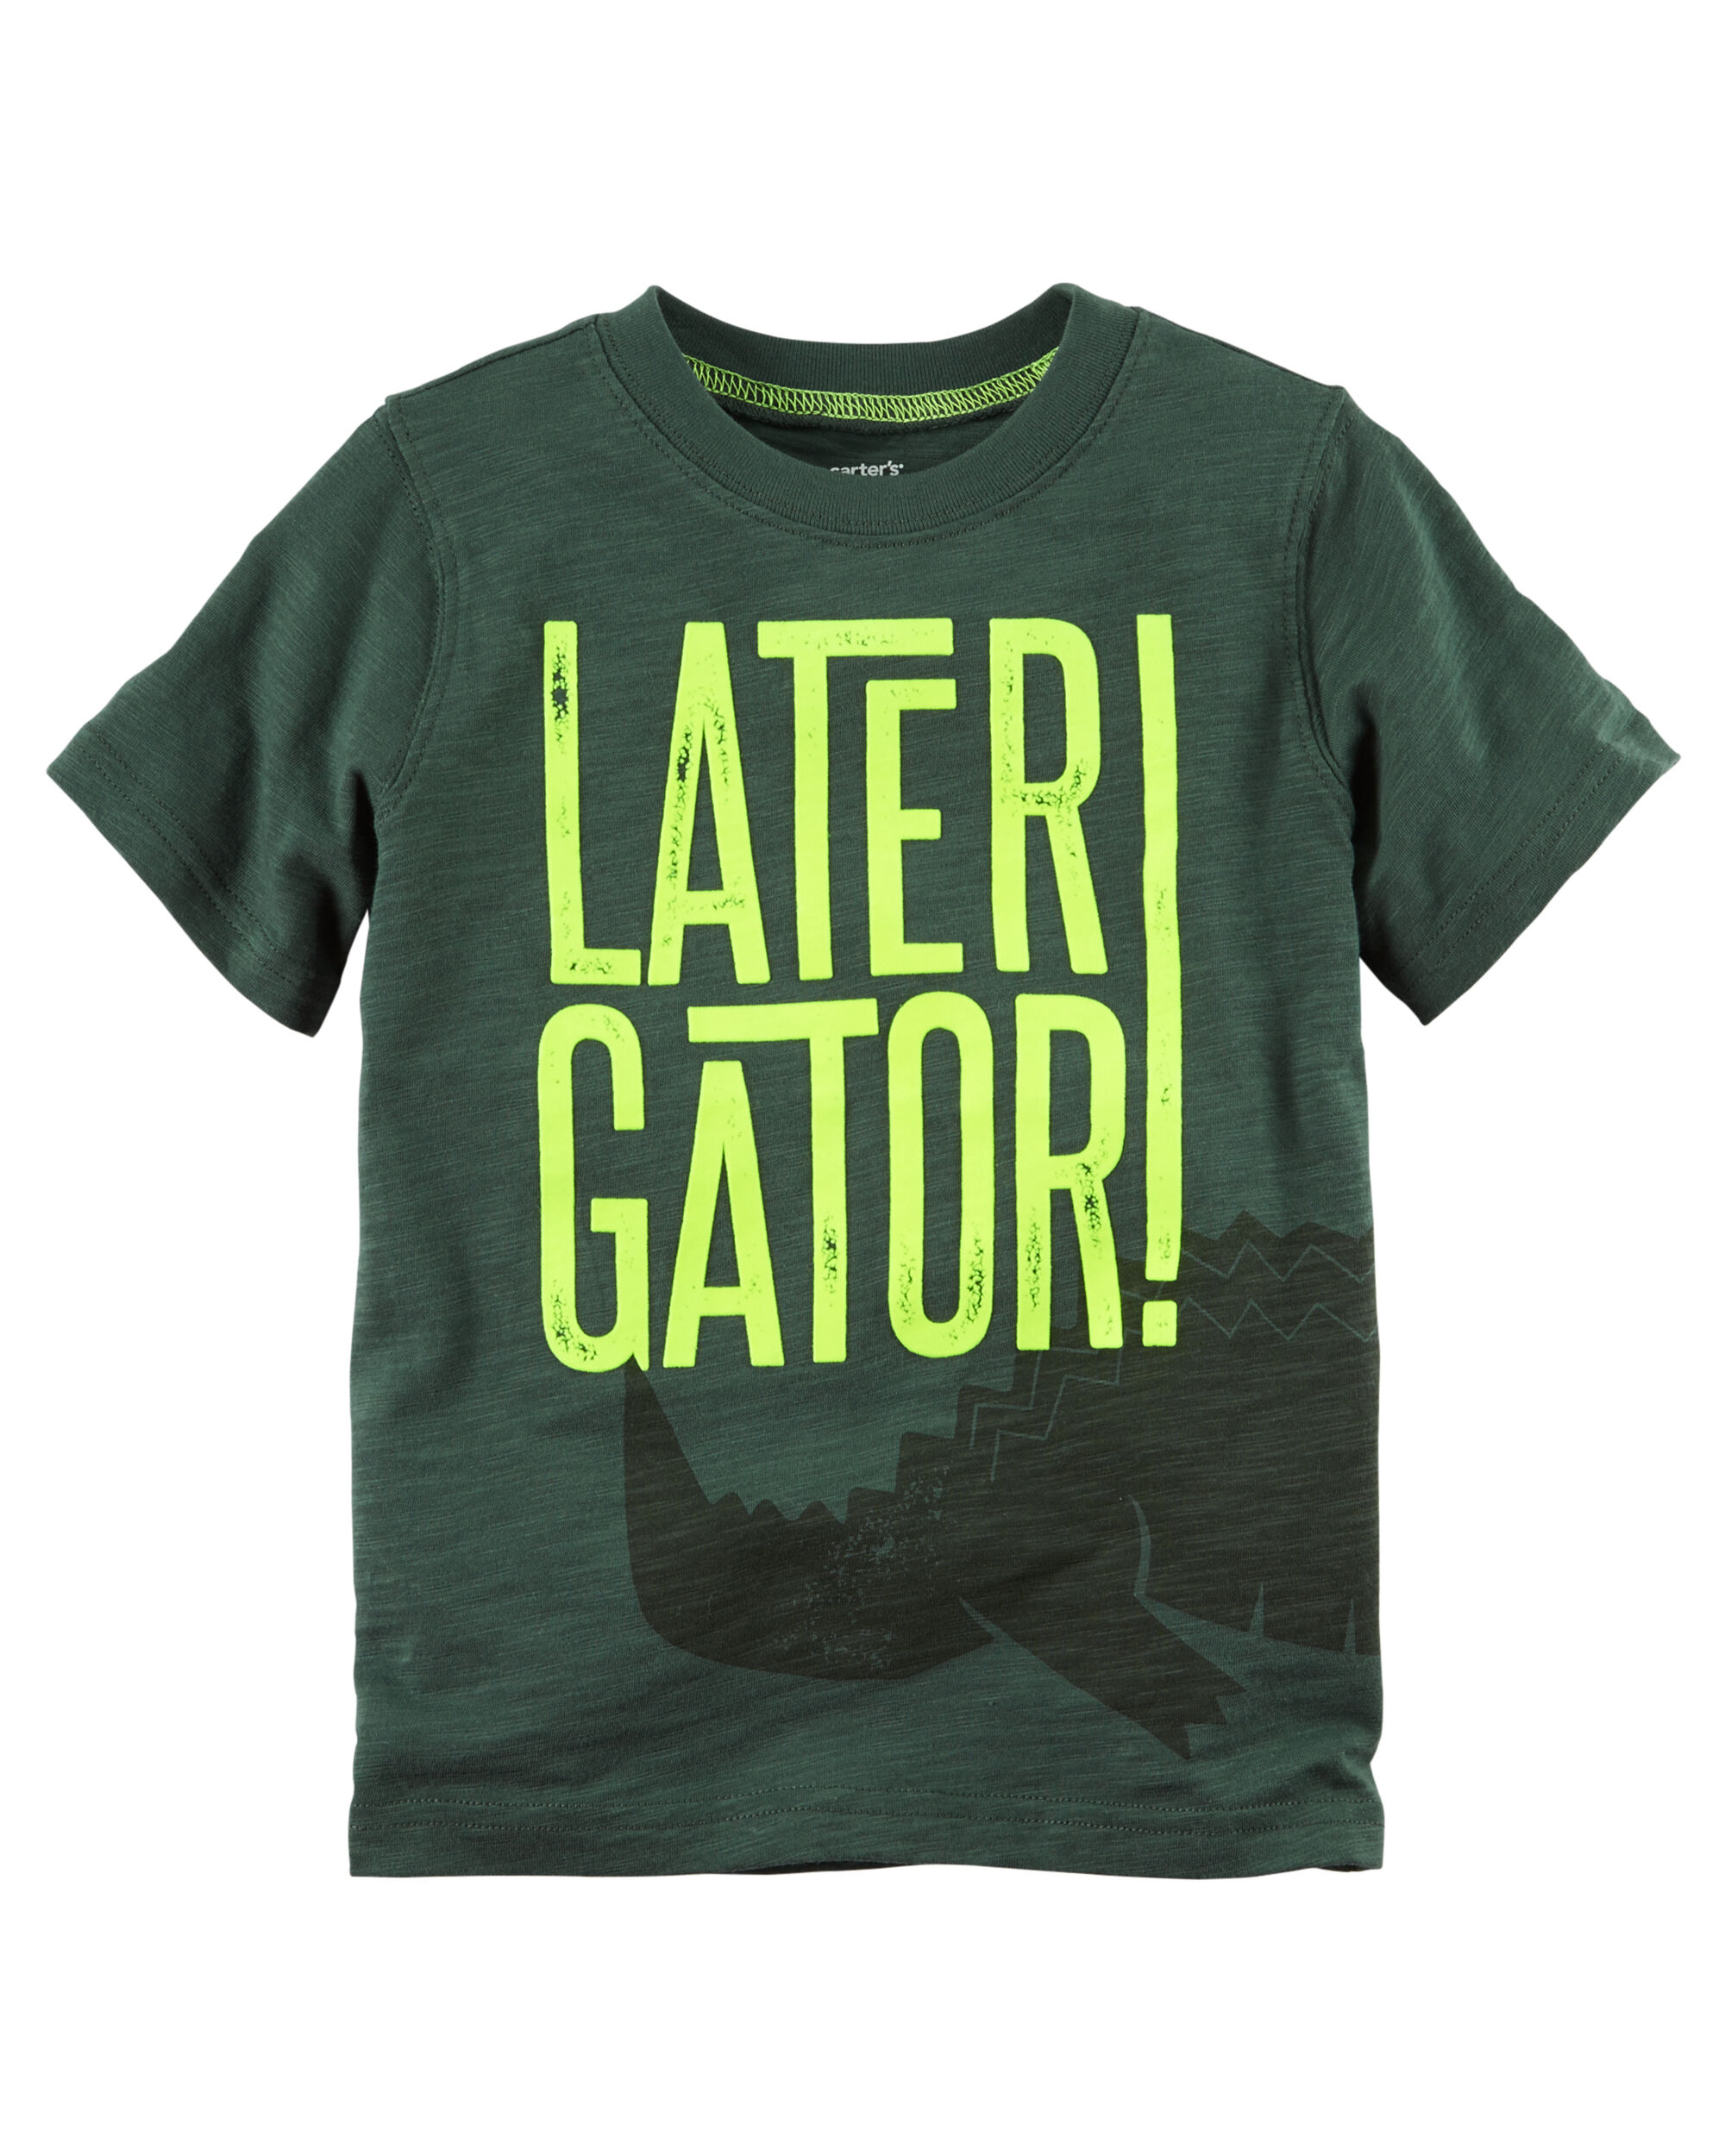 later gator shirt